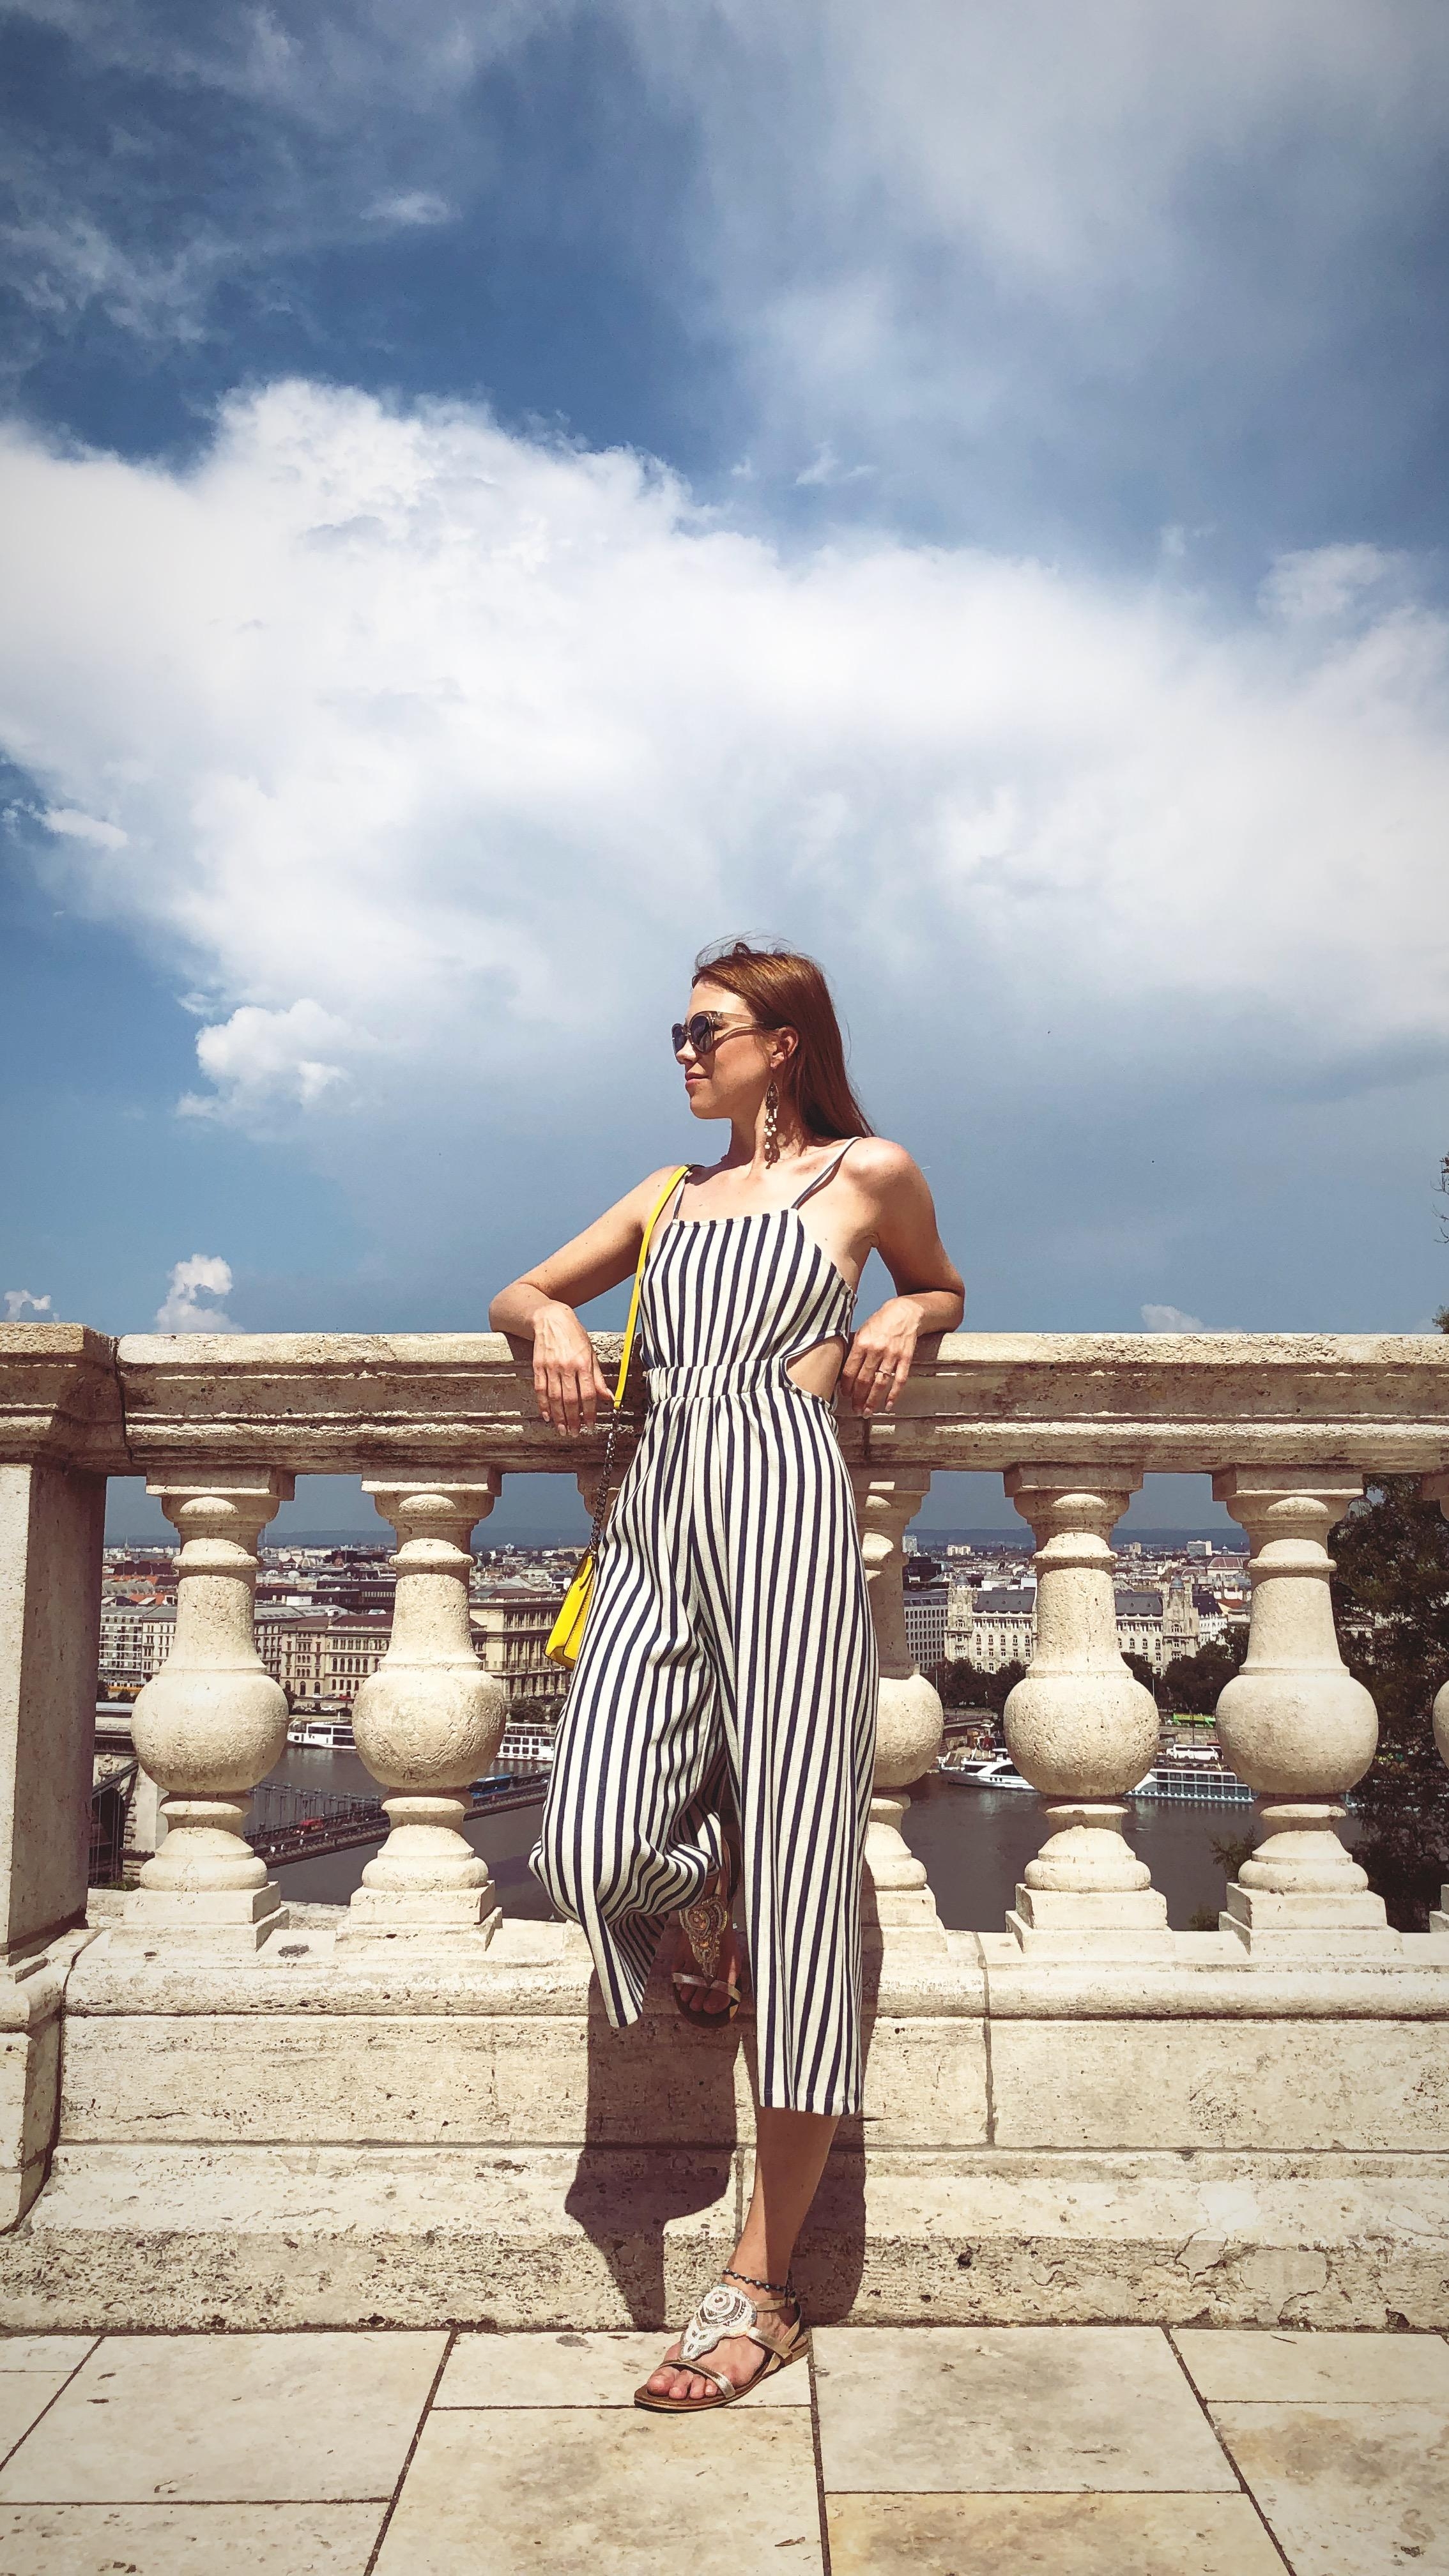 Hello Sunshine #travel #budapest #summervibes #summerlook #travelblogger